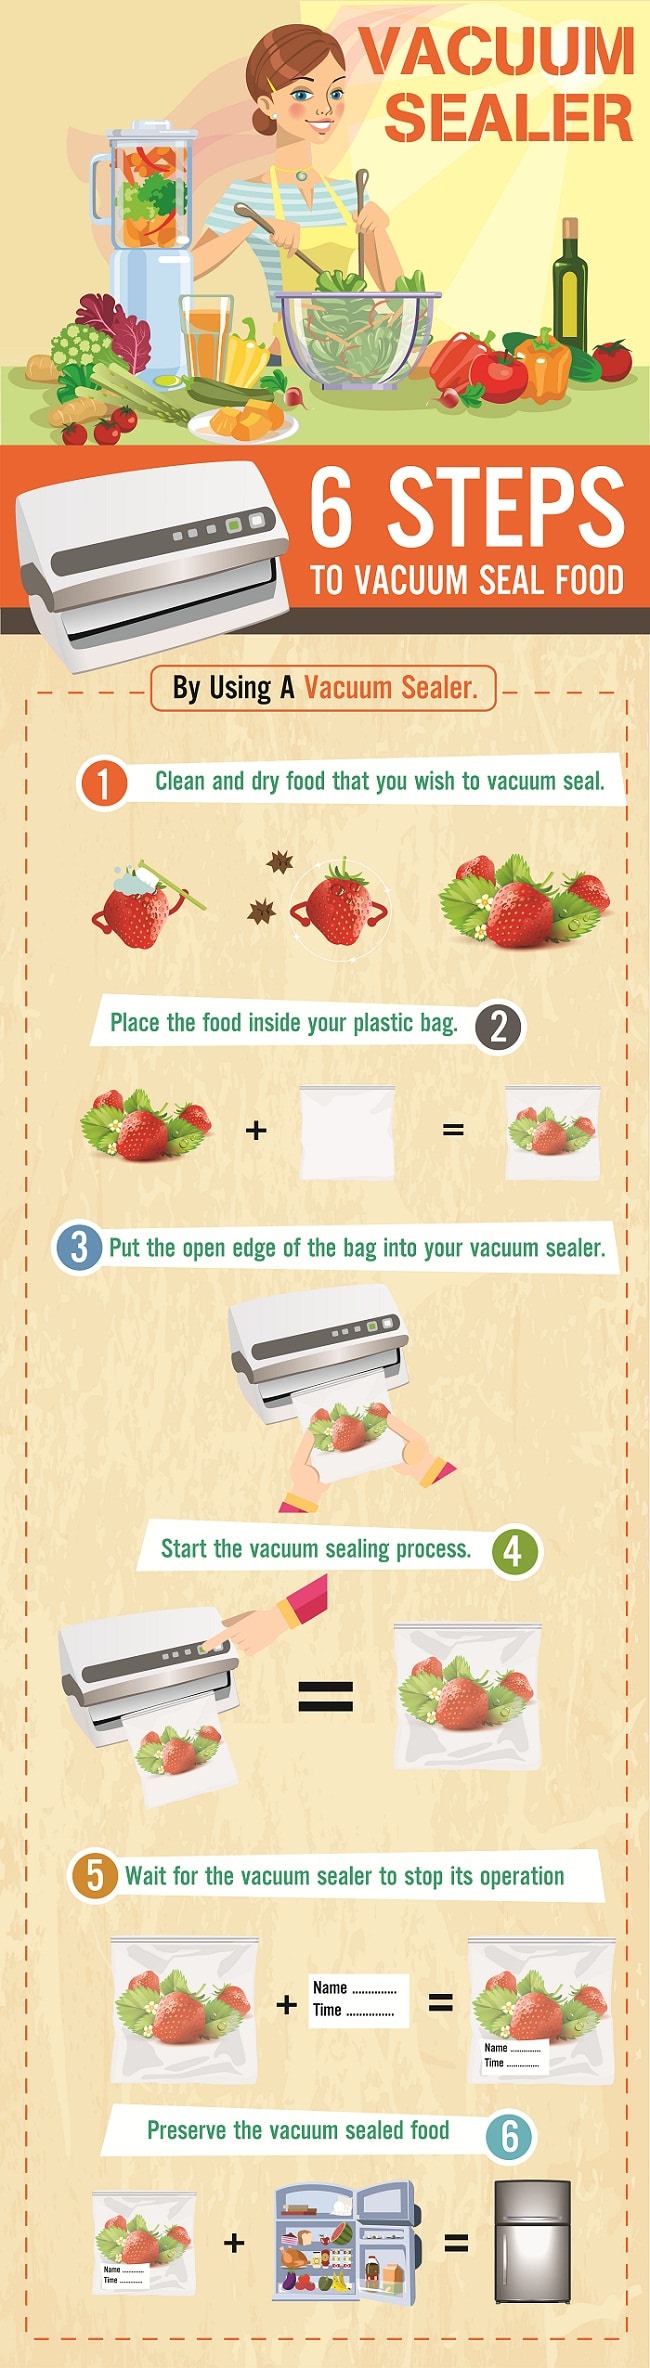 6 steps to vacuum seal food by using a vacuum sealer